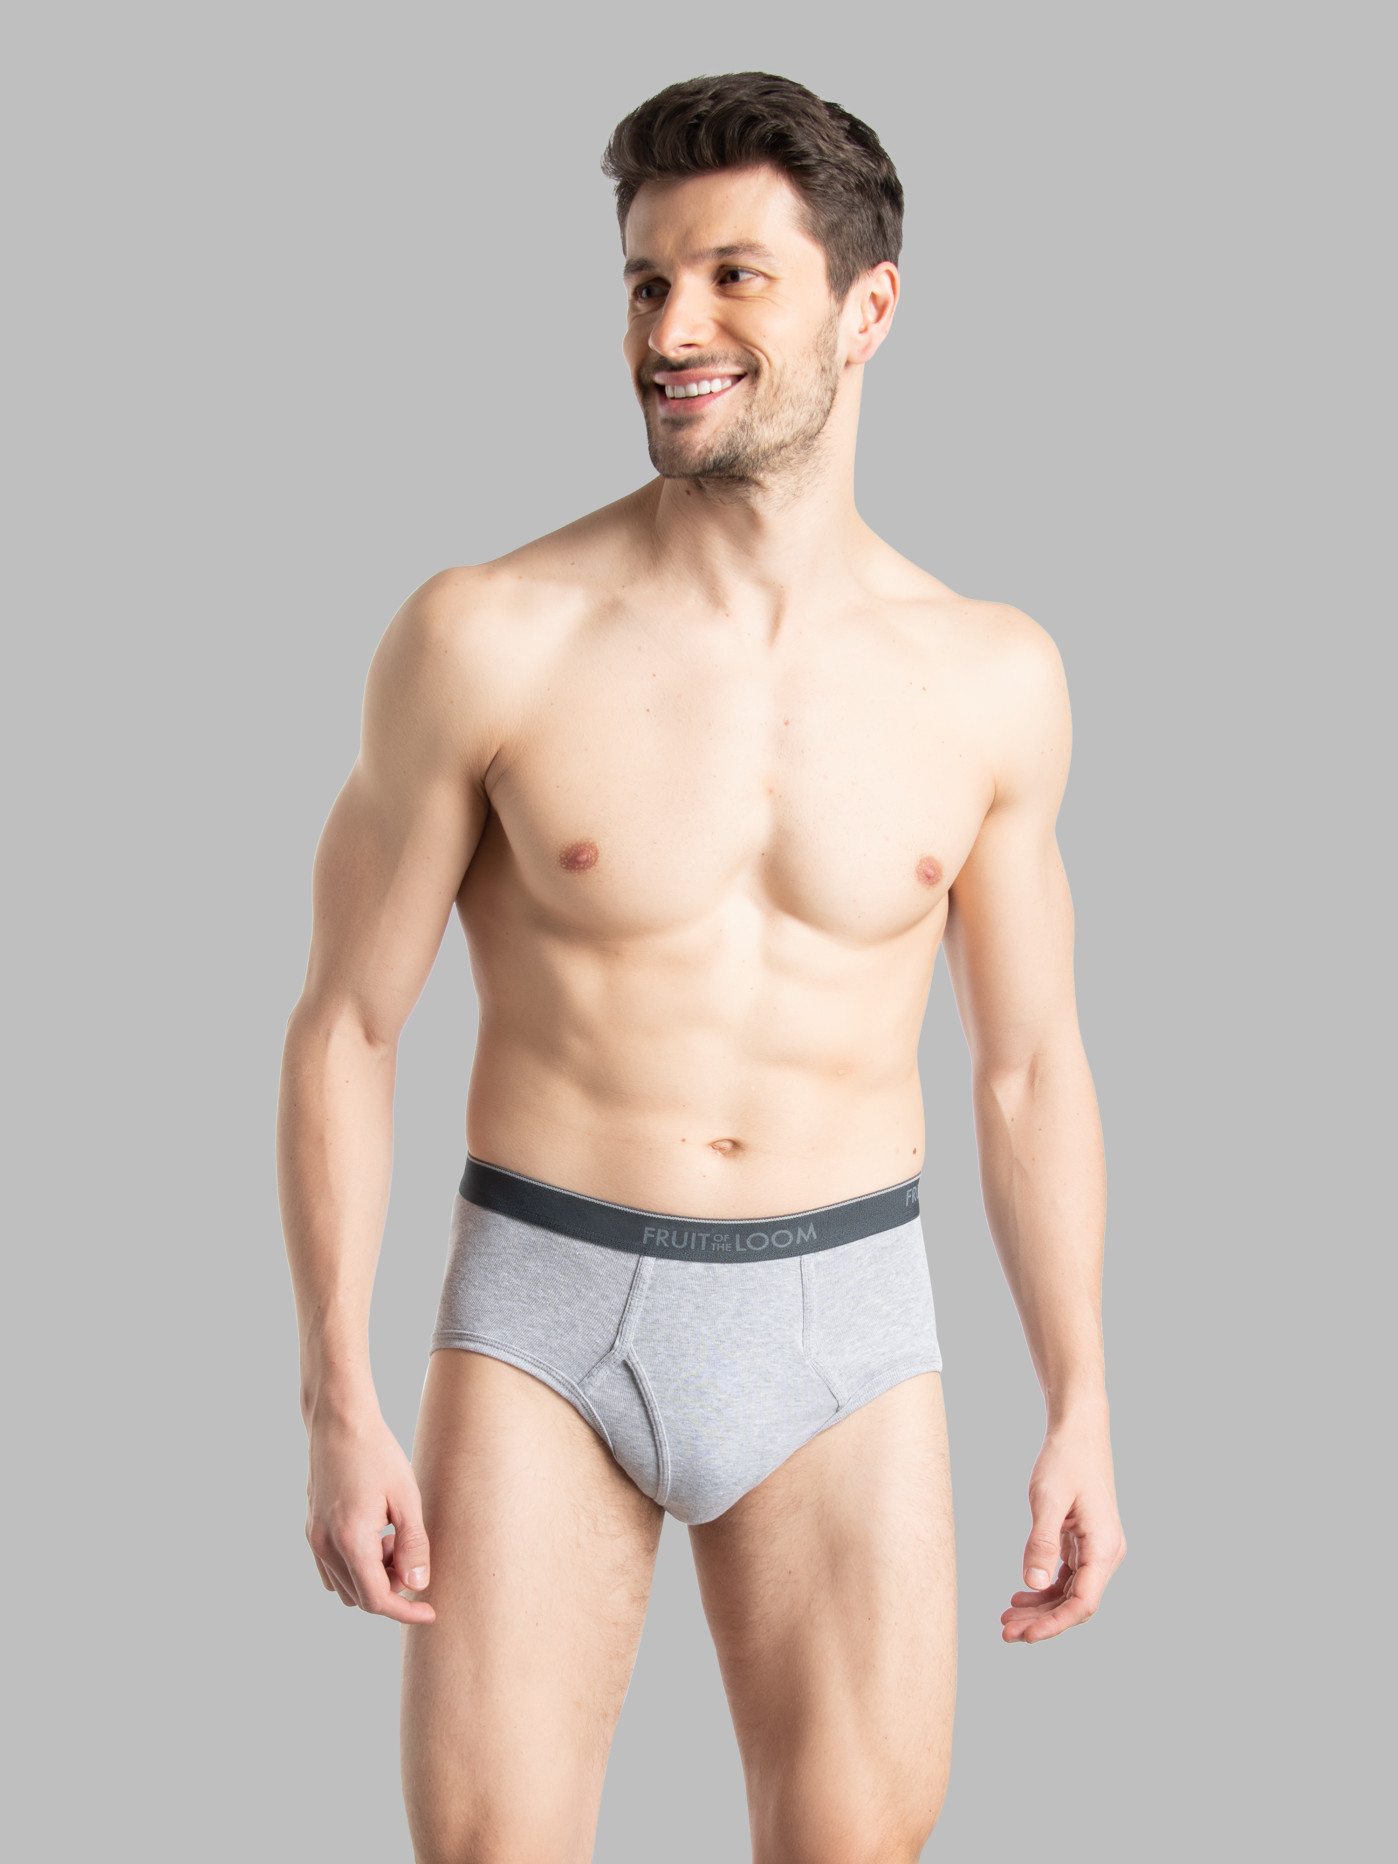 PMUYBHF Male Men's Underwear Sets Big and Tall Male Fashion